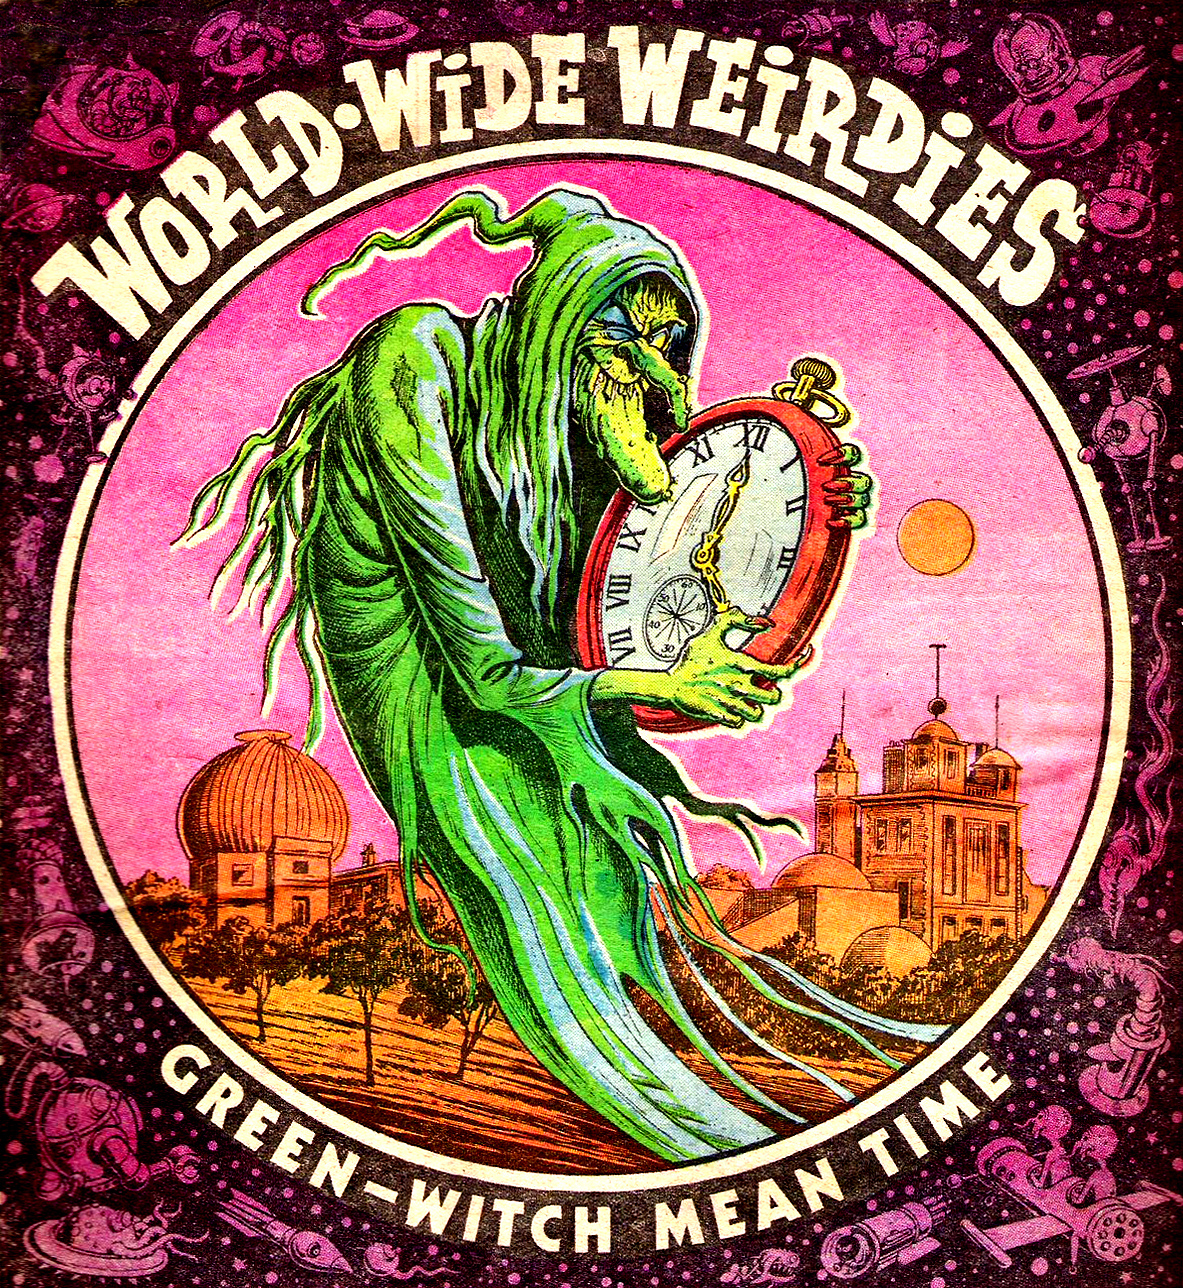 Ken Reid - World Wide Weirdies 22